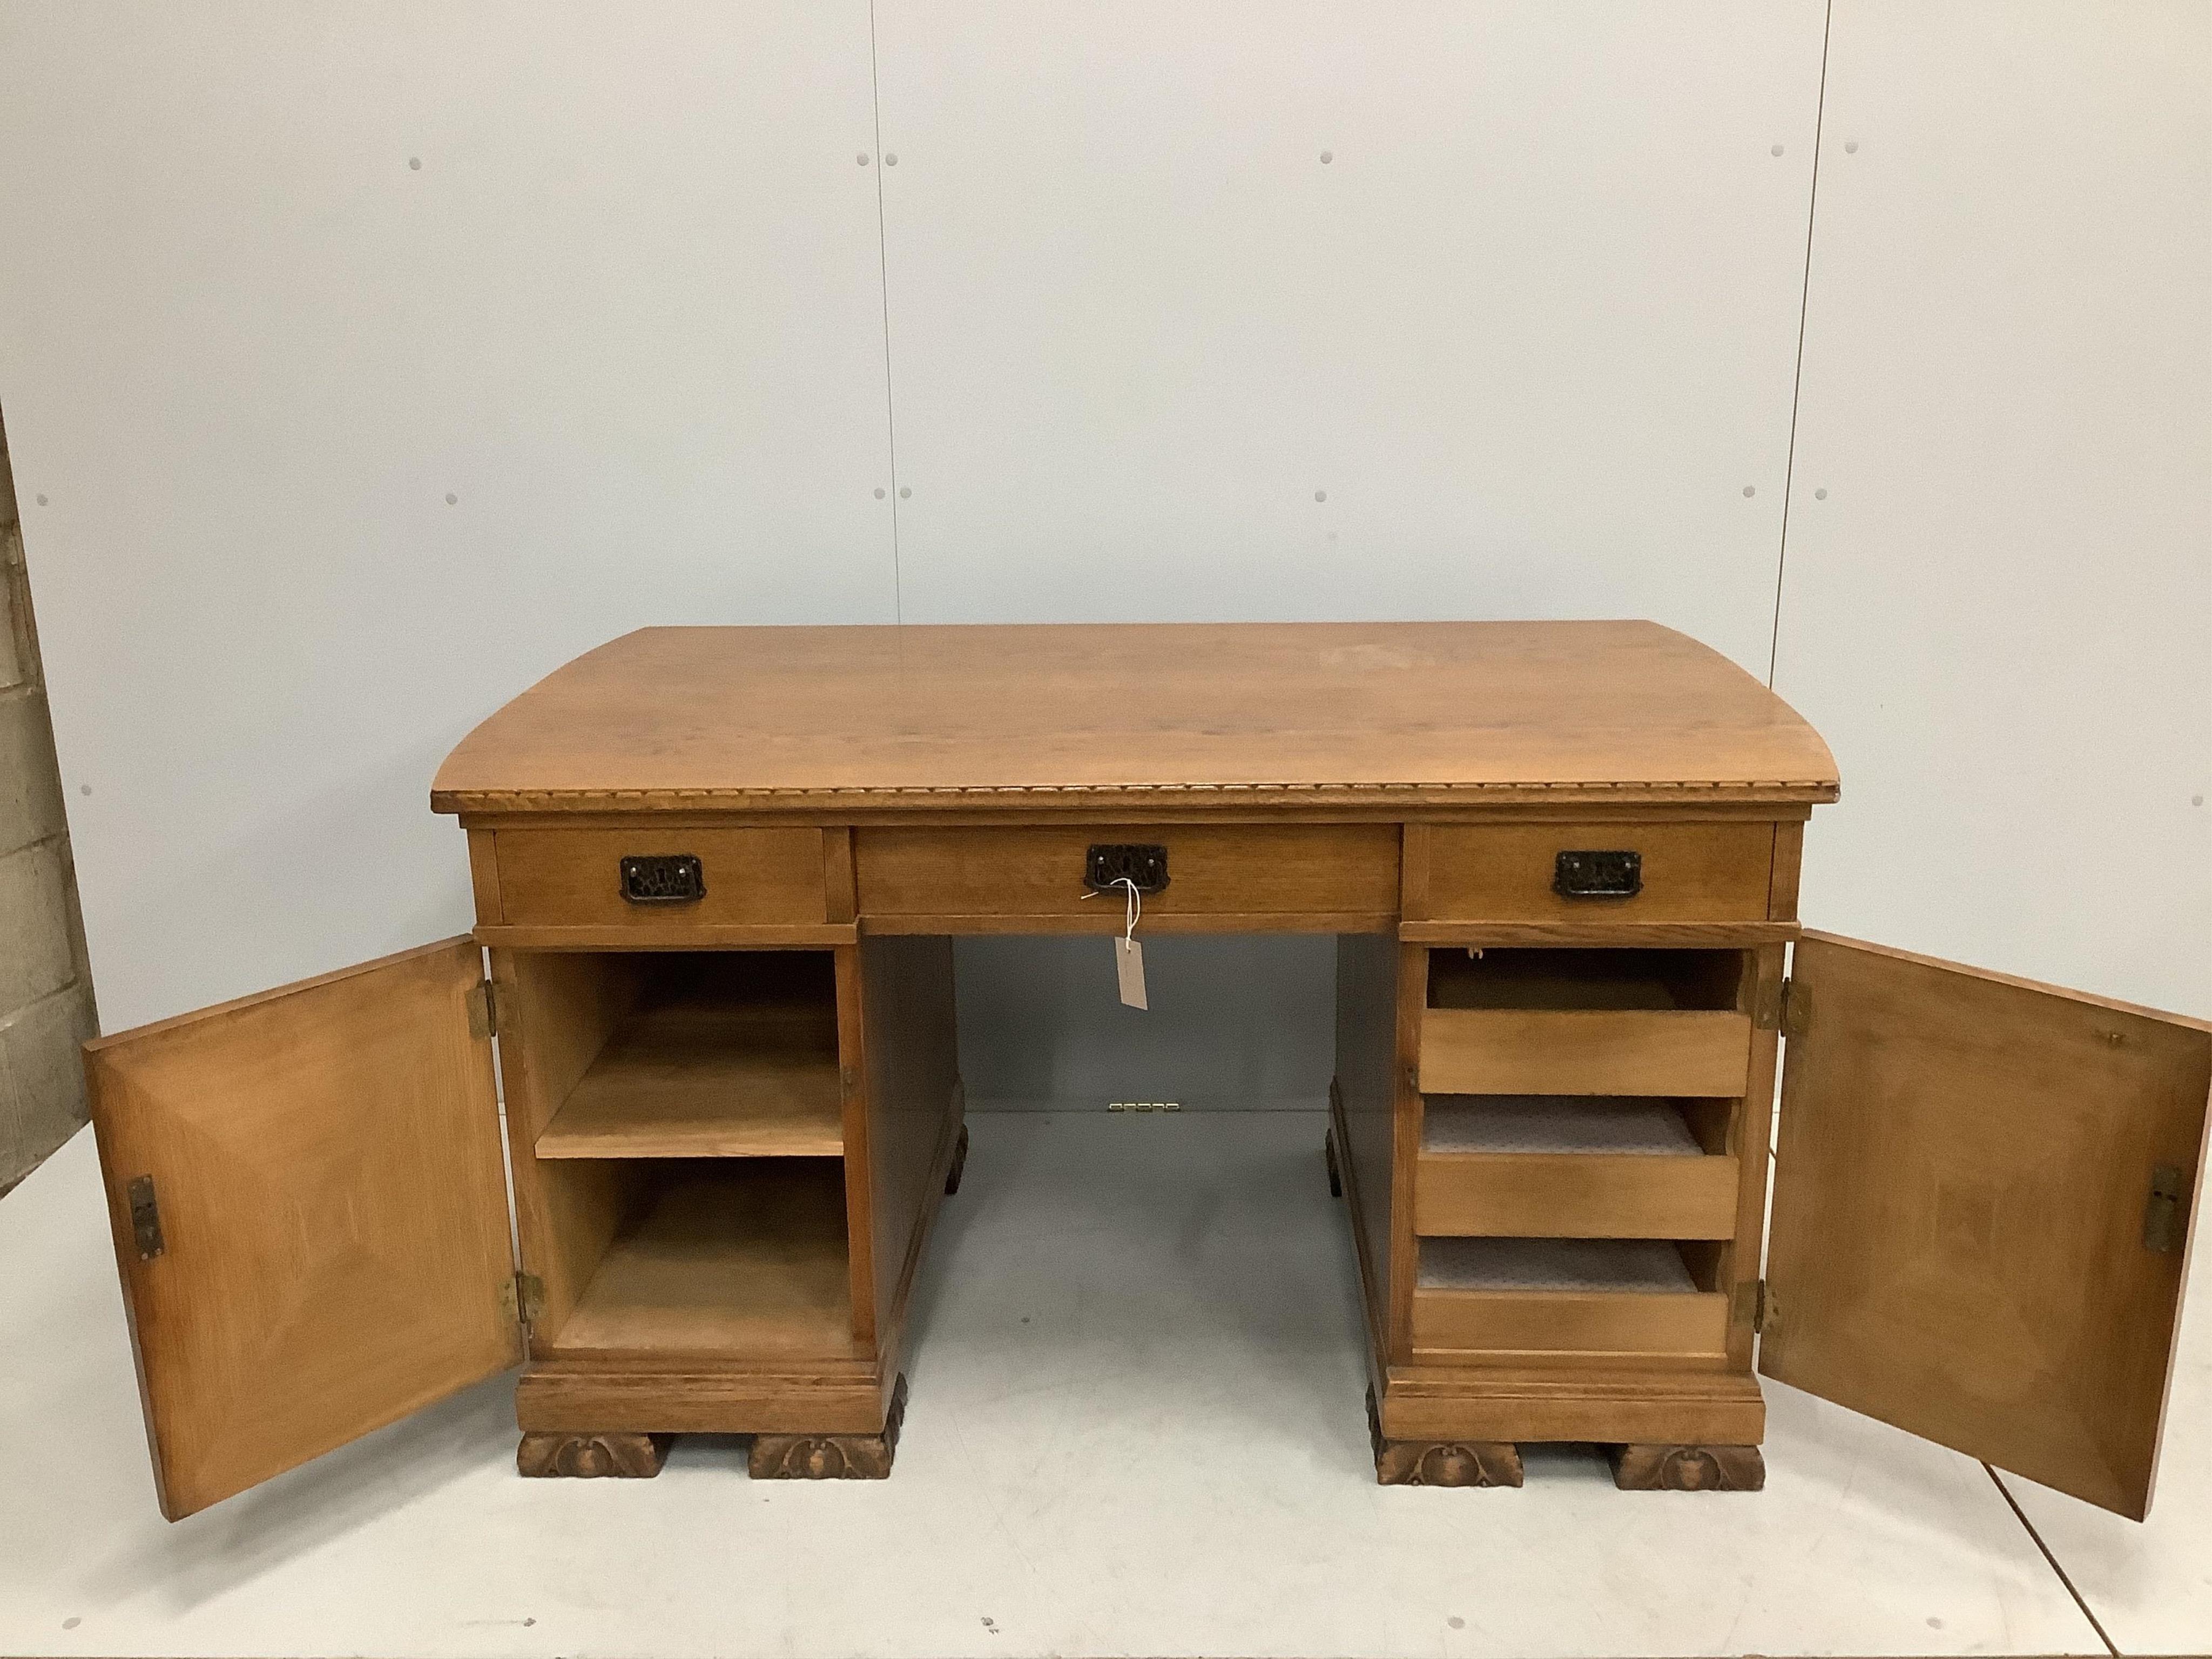 An early 20th century French oak pedestal desk, width 139cm, depth 79cm, height 76cm. Condition - fair